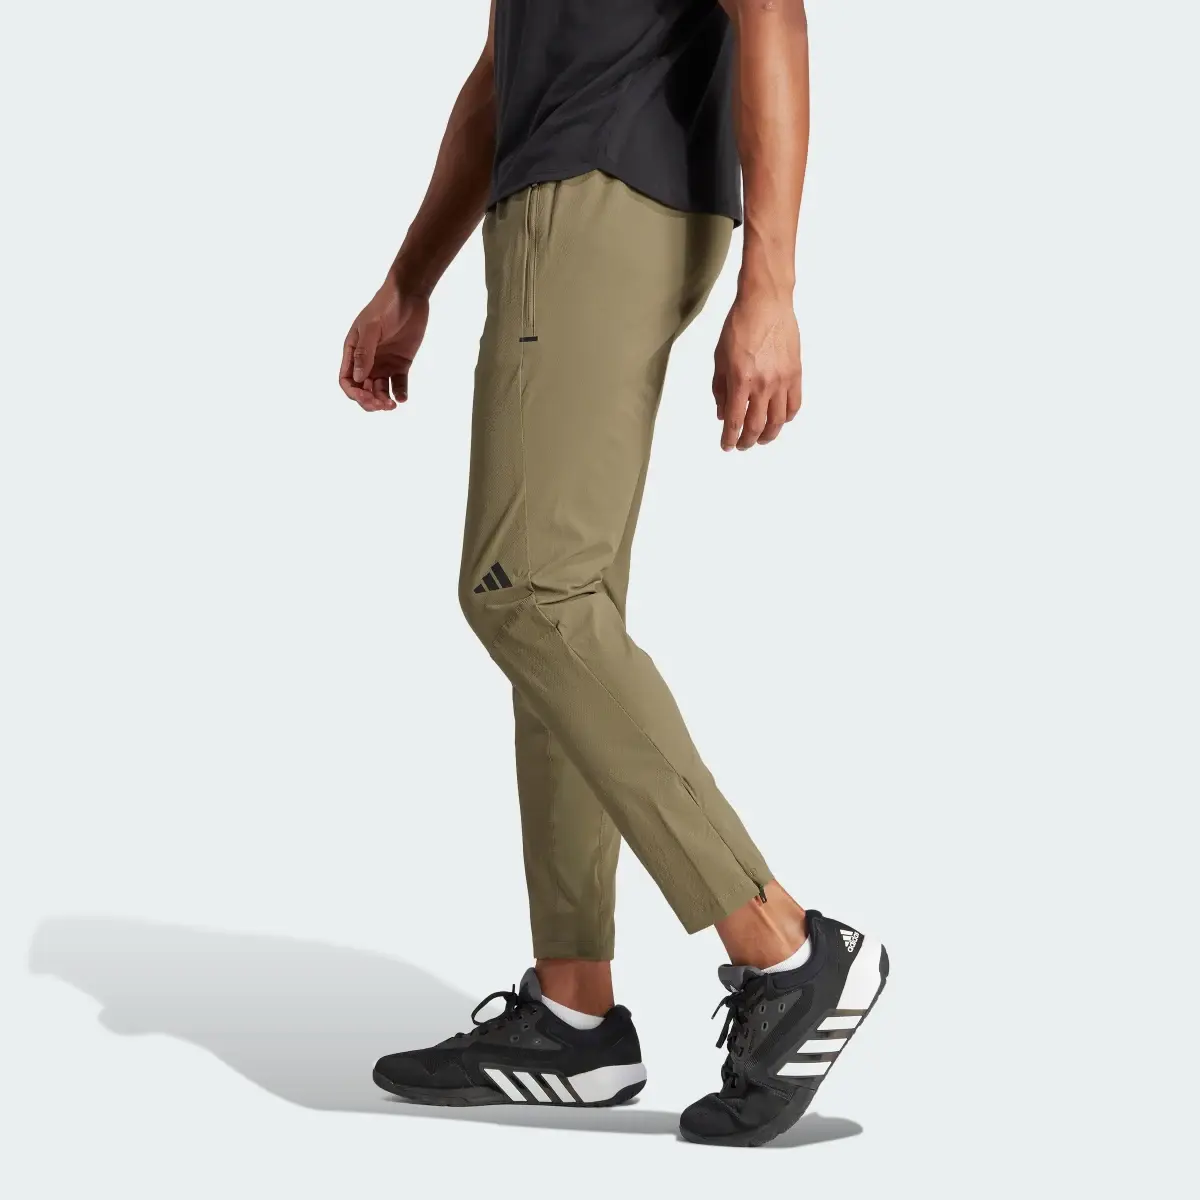 Adidas Designed for Training CORDURA Workout Pants. 2